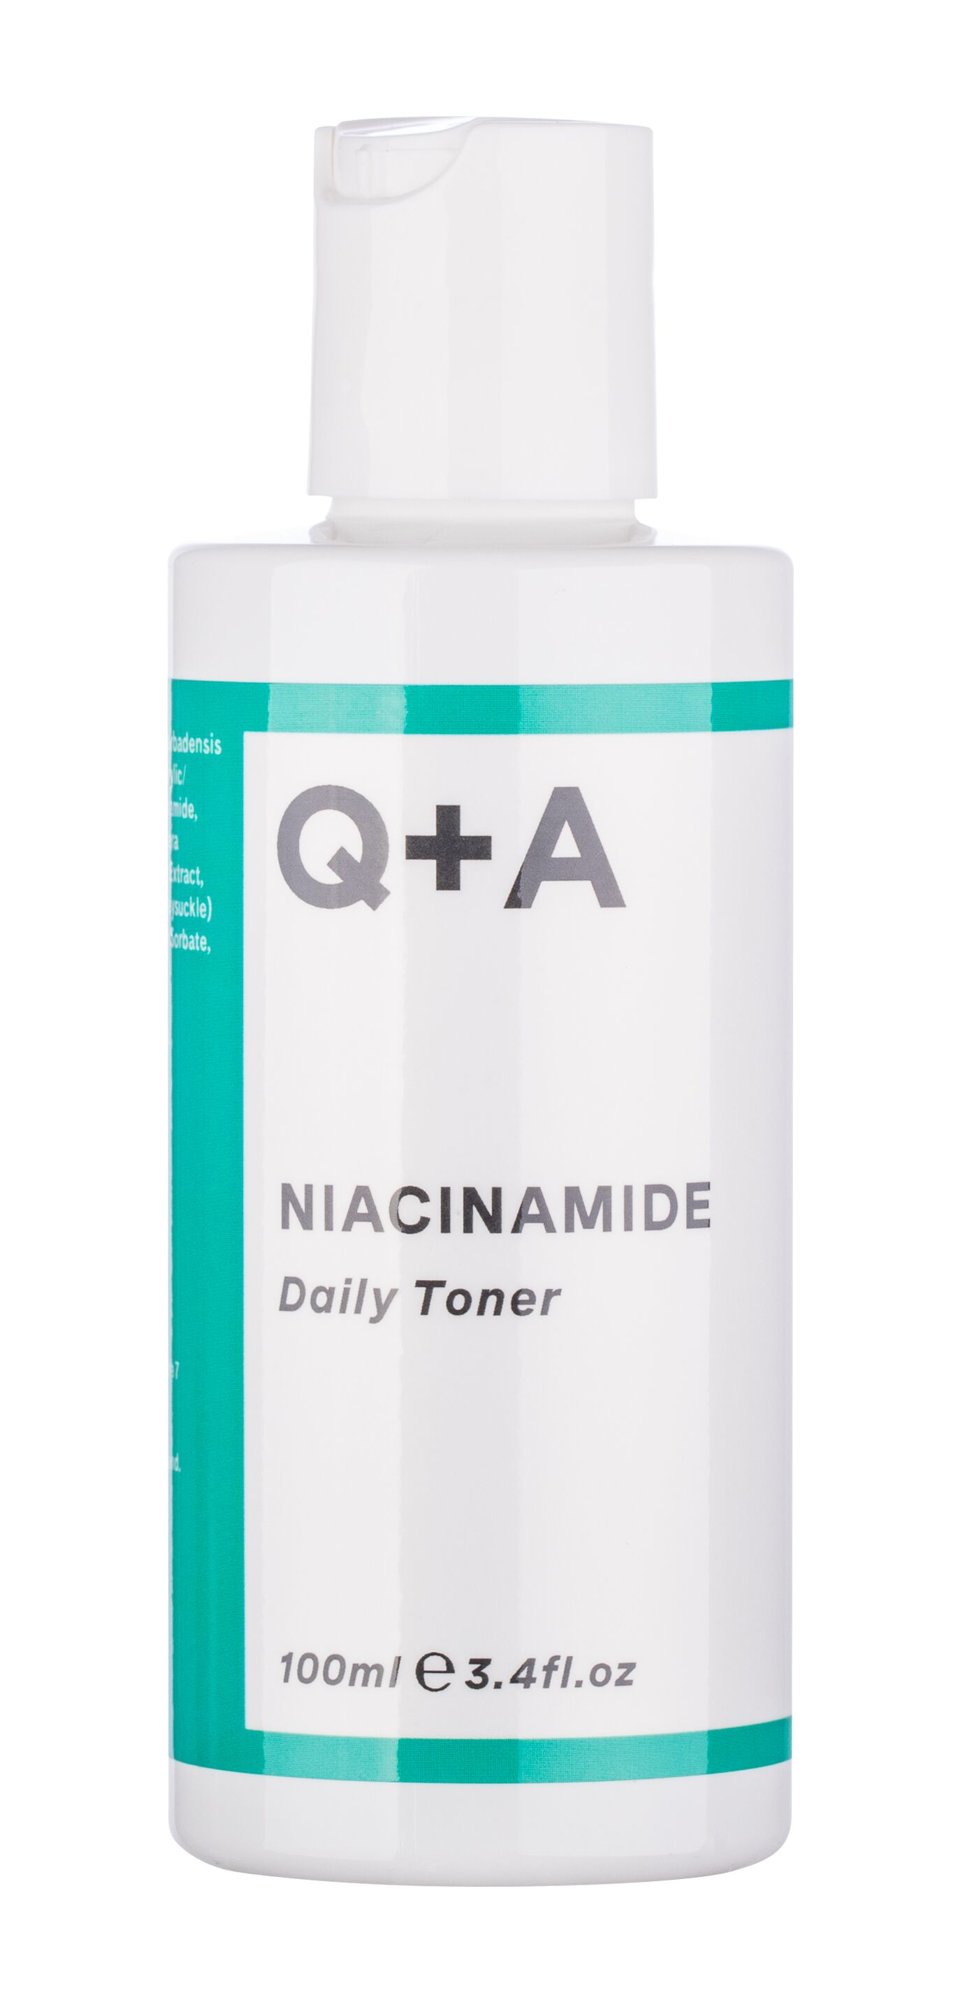 Q+A Niacinamide Daily Toner 100ml valomasis vanduo veidui